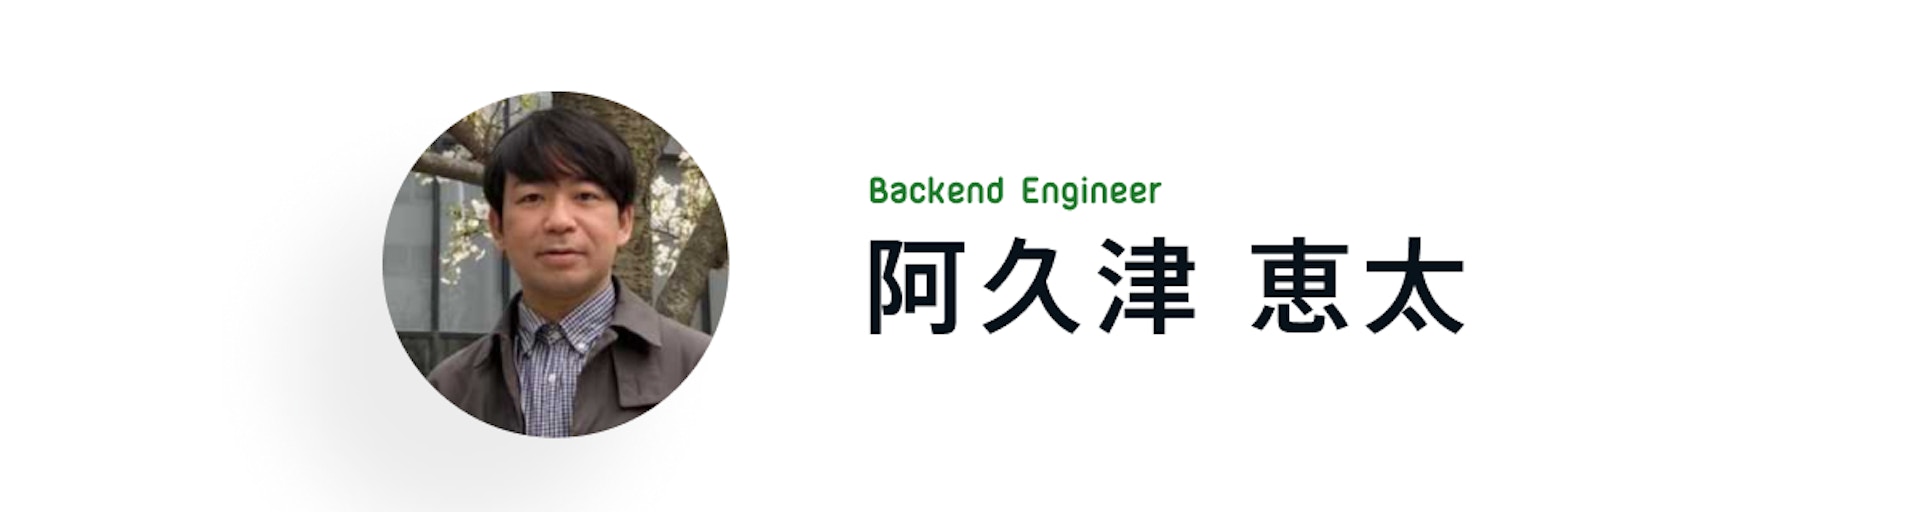 Backend Engineer 阿久津 恵太